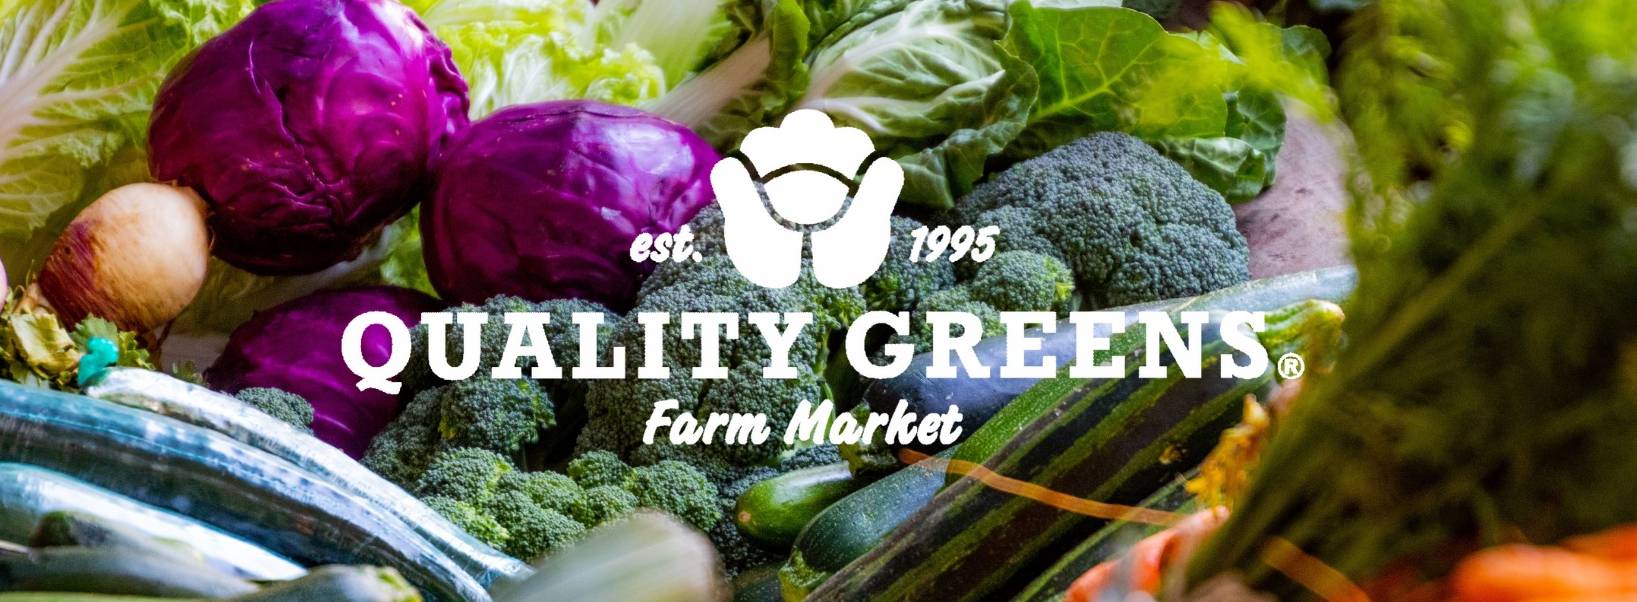 Quality Greens Farm Market Online